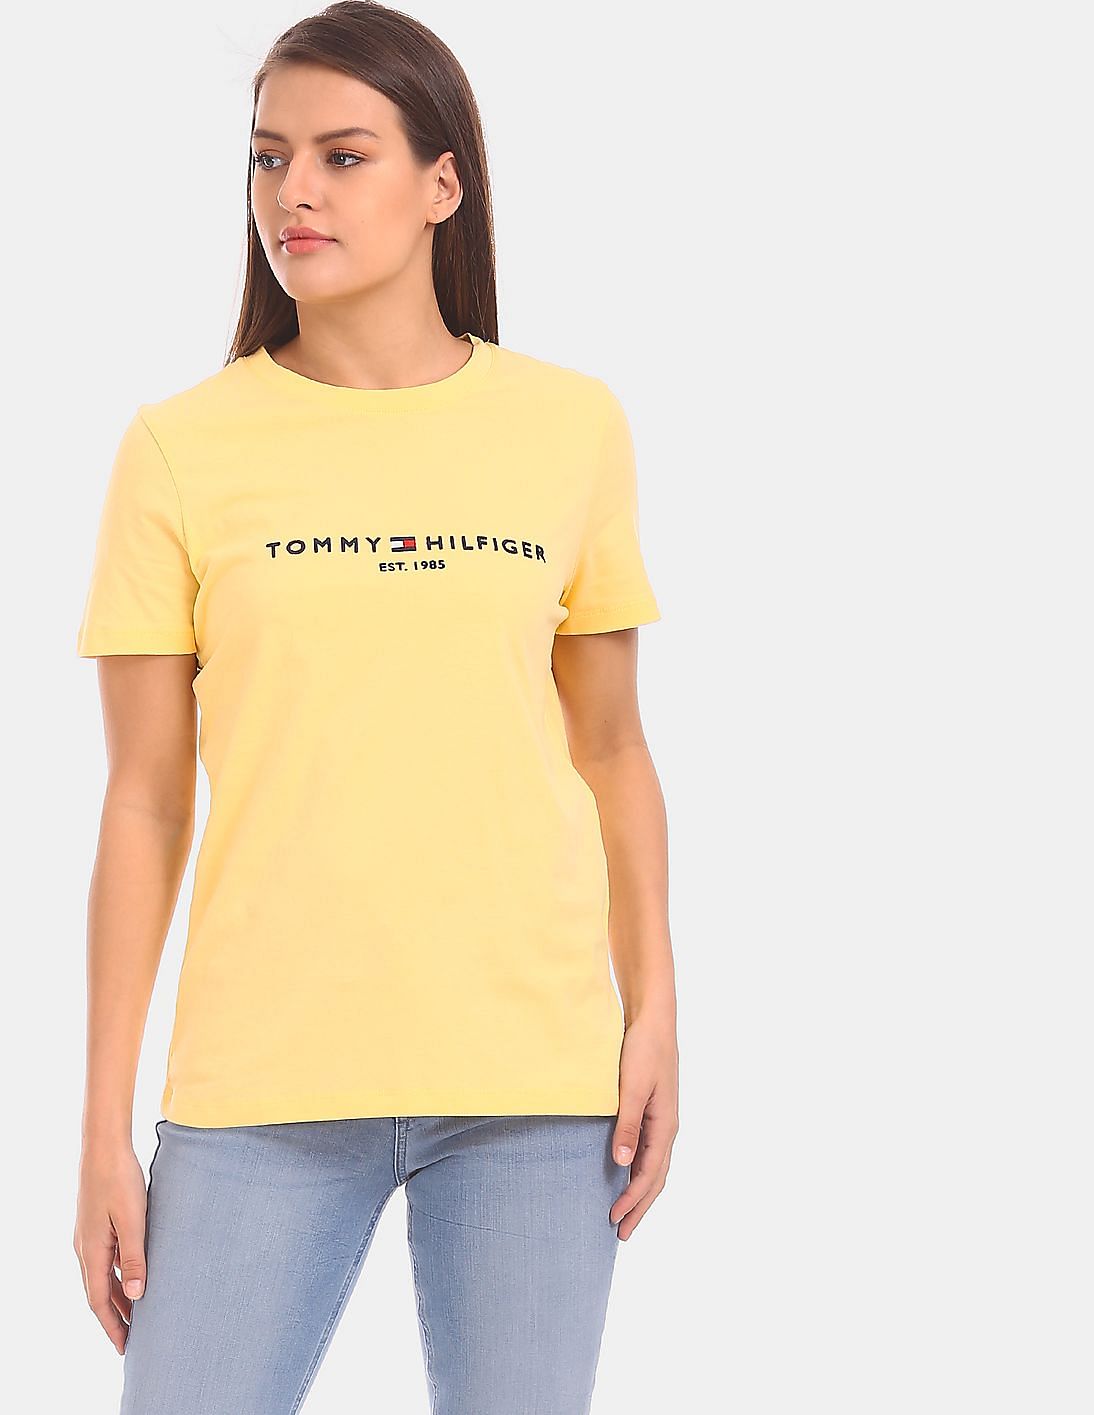 Buy Tommy Hilfiger Women Women Yellow Short Sleeve Crew Neck Logo T ...